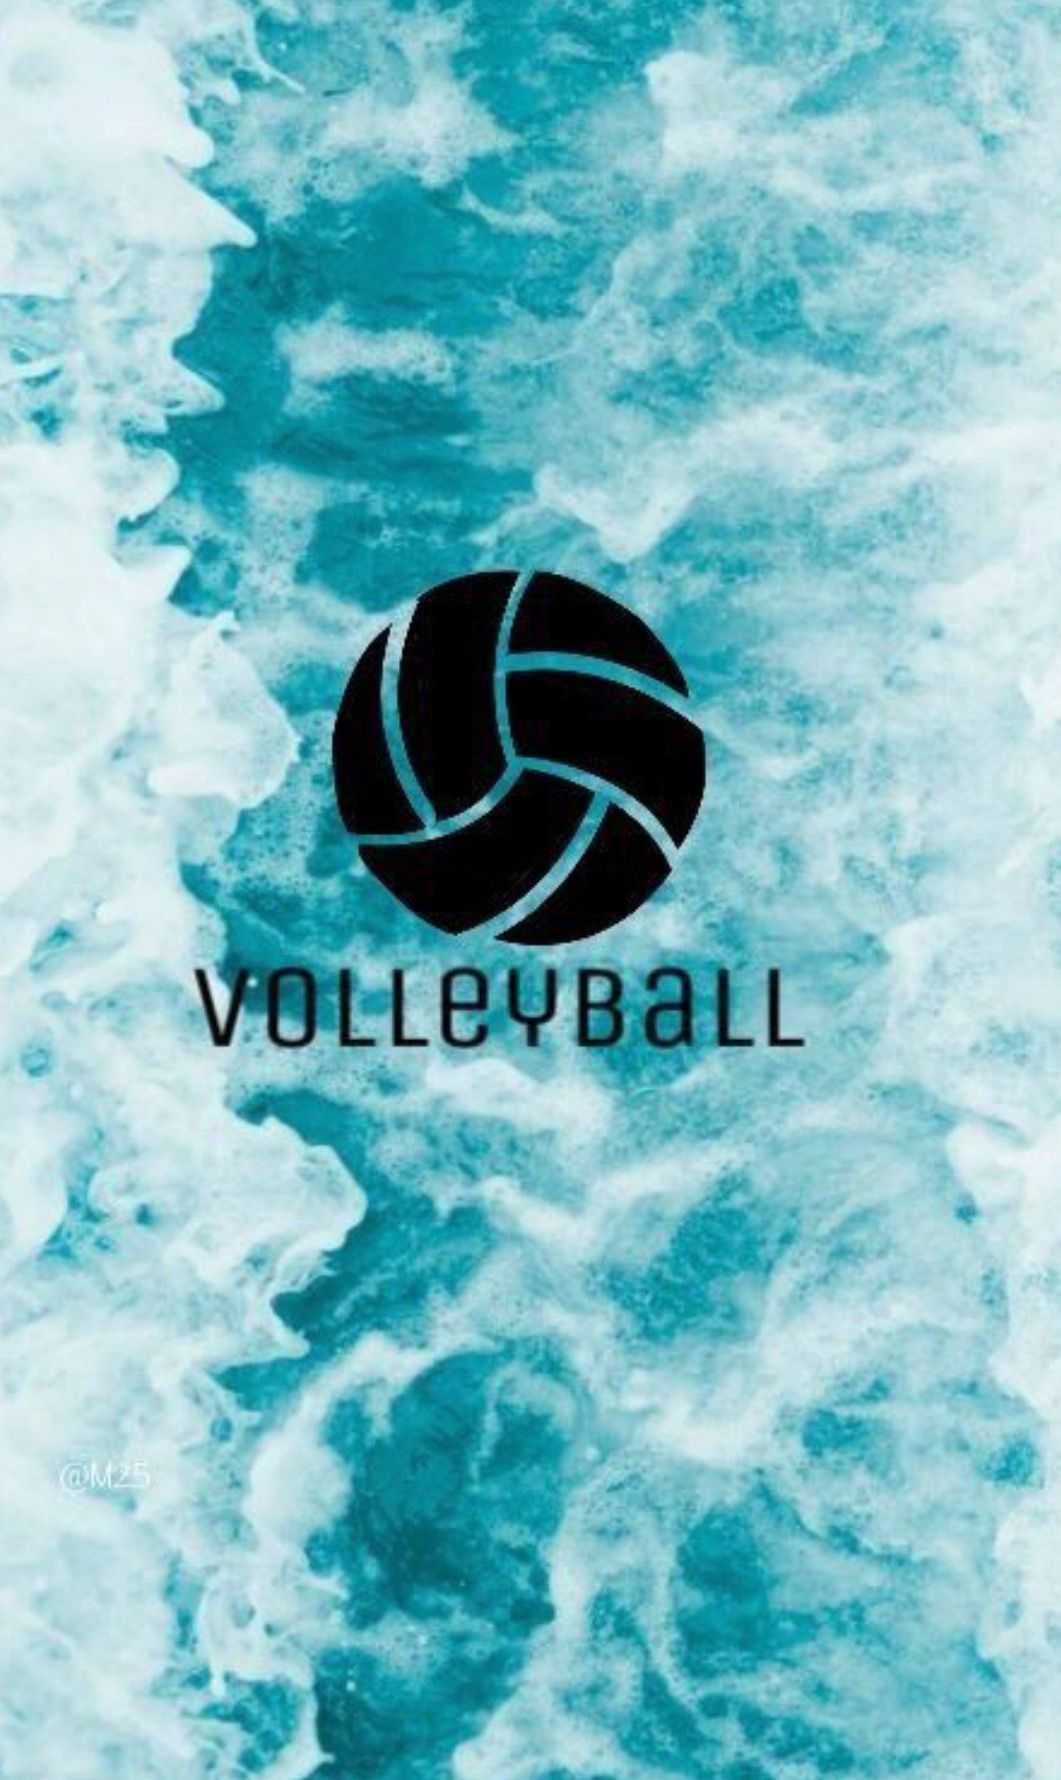 Volleyball Wallpaper